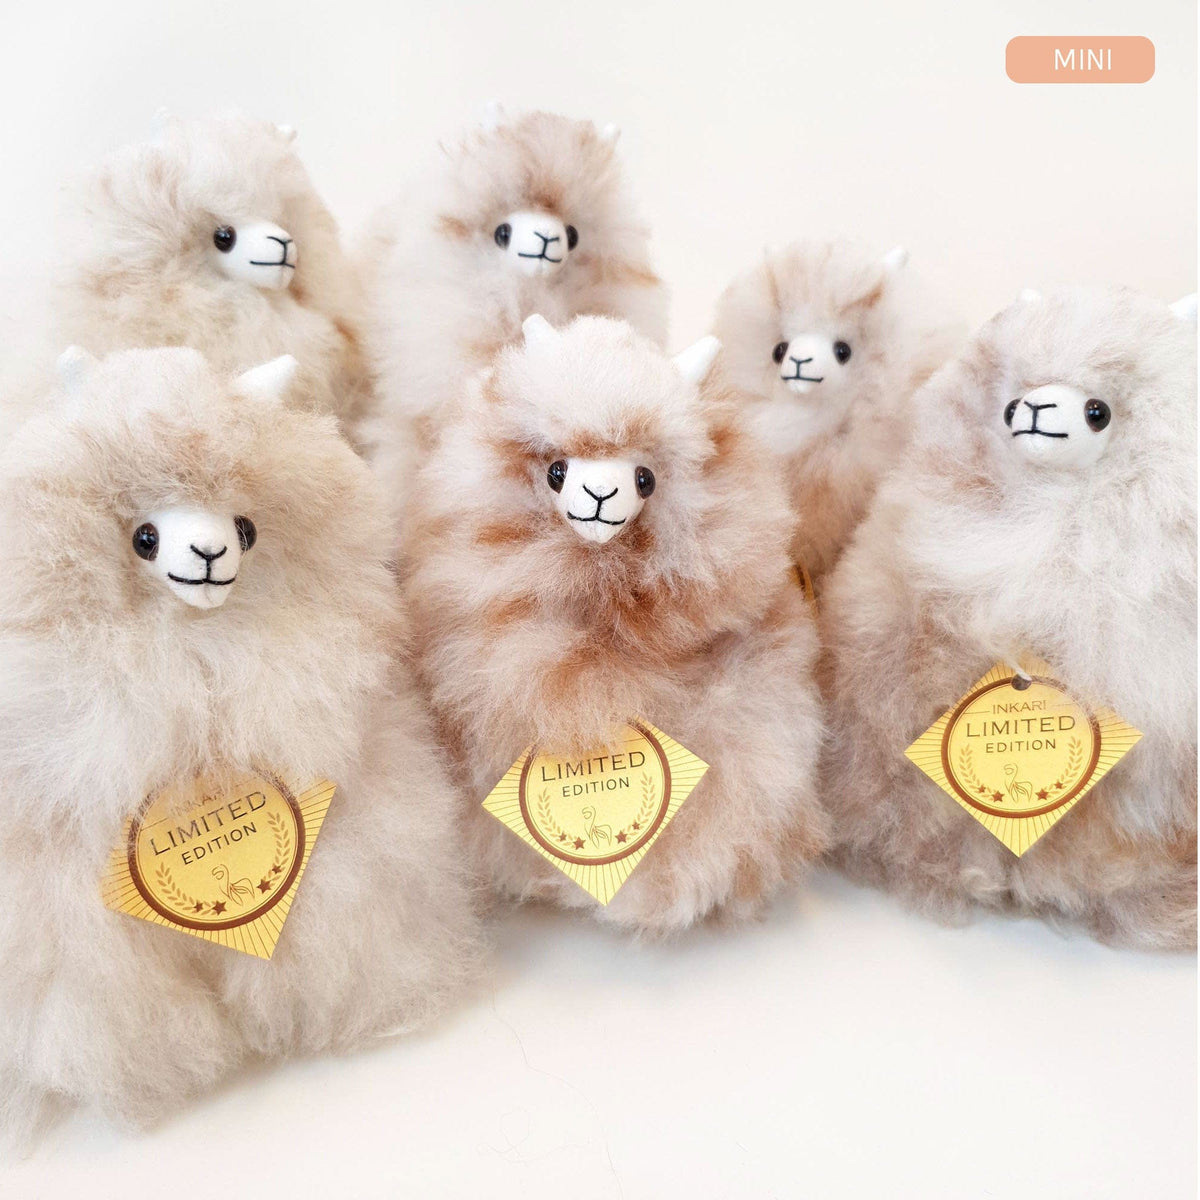 Limited Edition - Sneeuwluipaardjong - Mini-alpacaspeelgoed (15 cm)